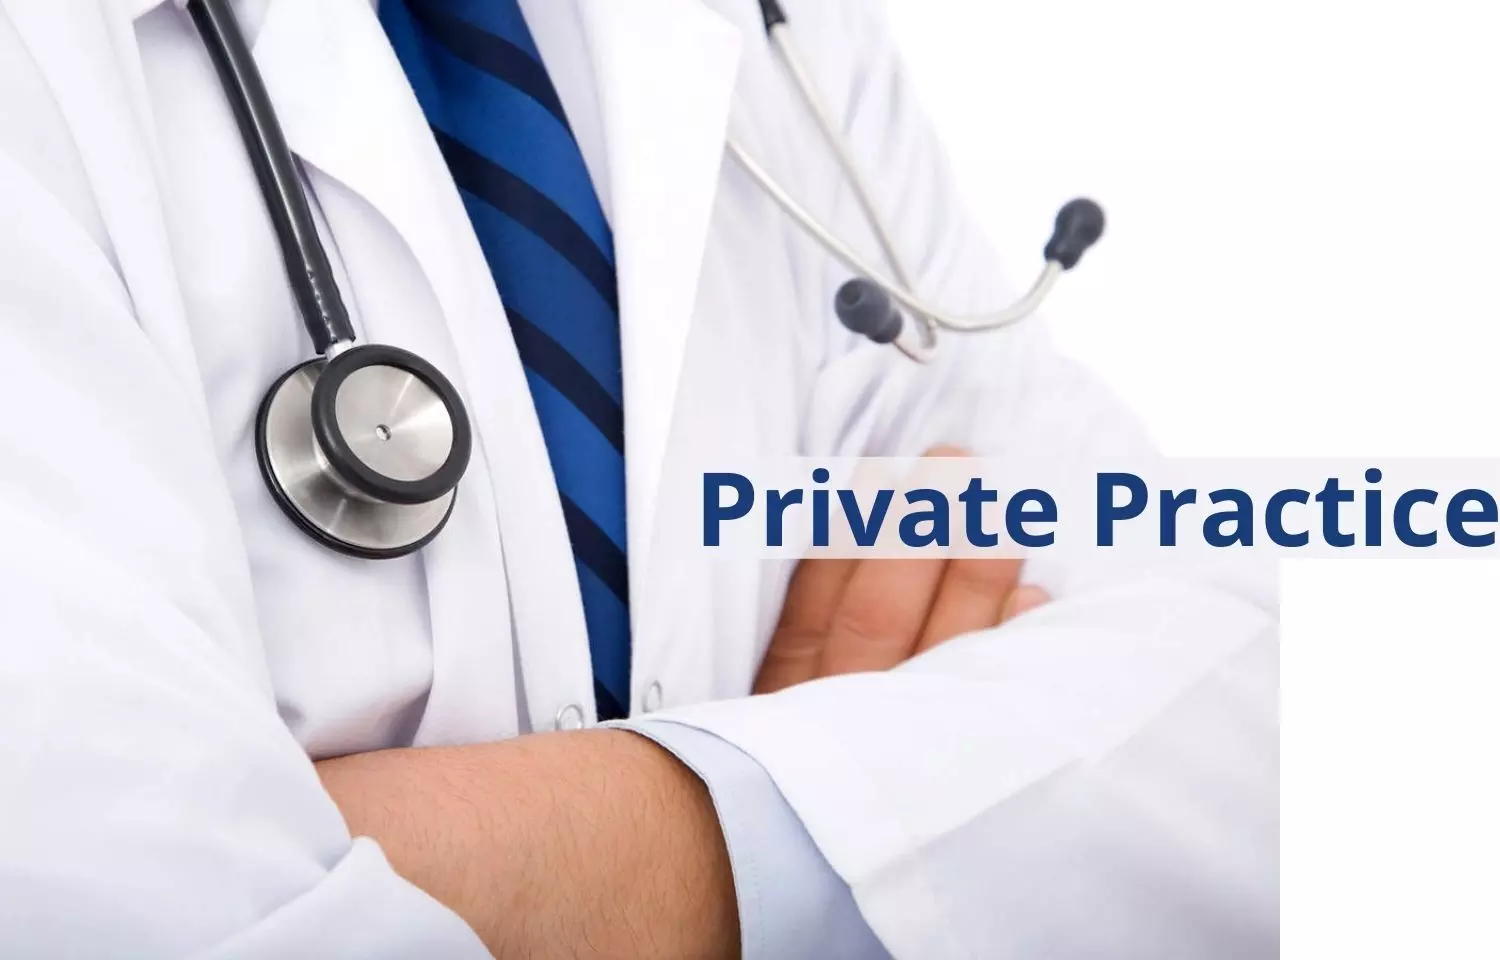 Govt doctors warned of Private Practice in Mohali